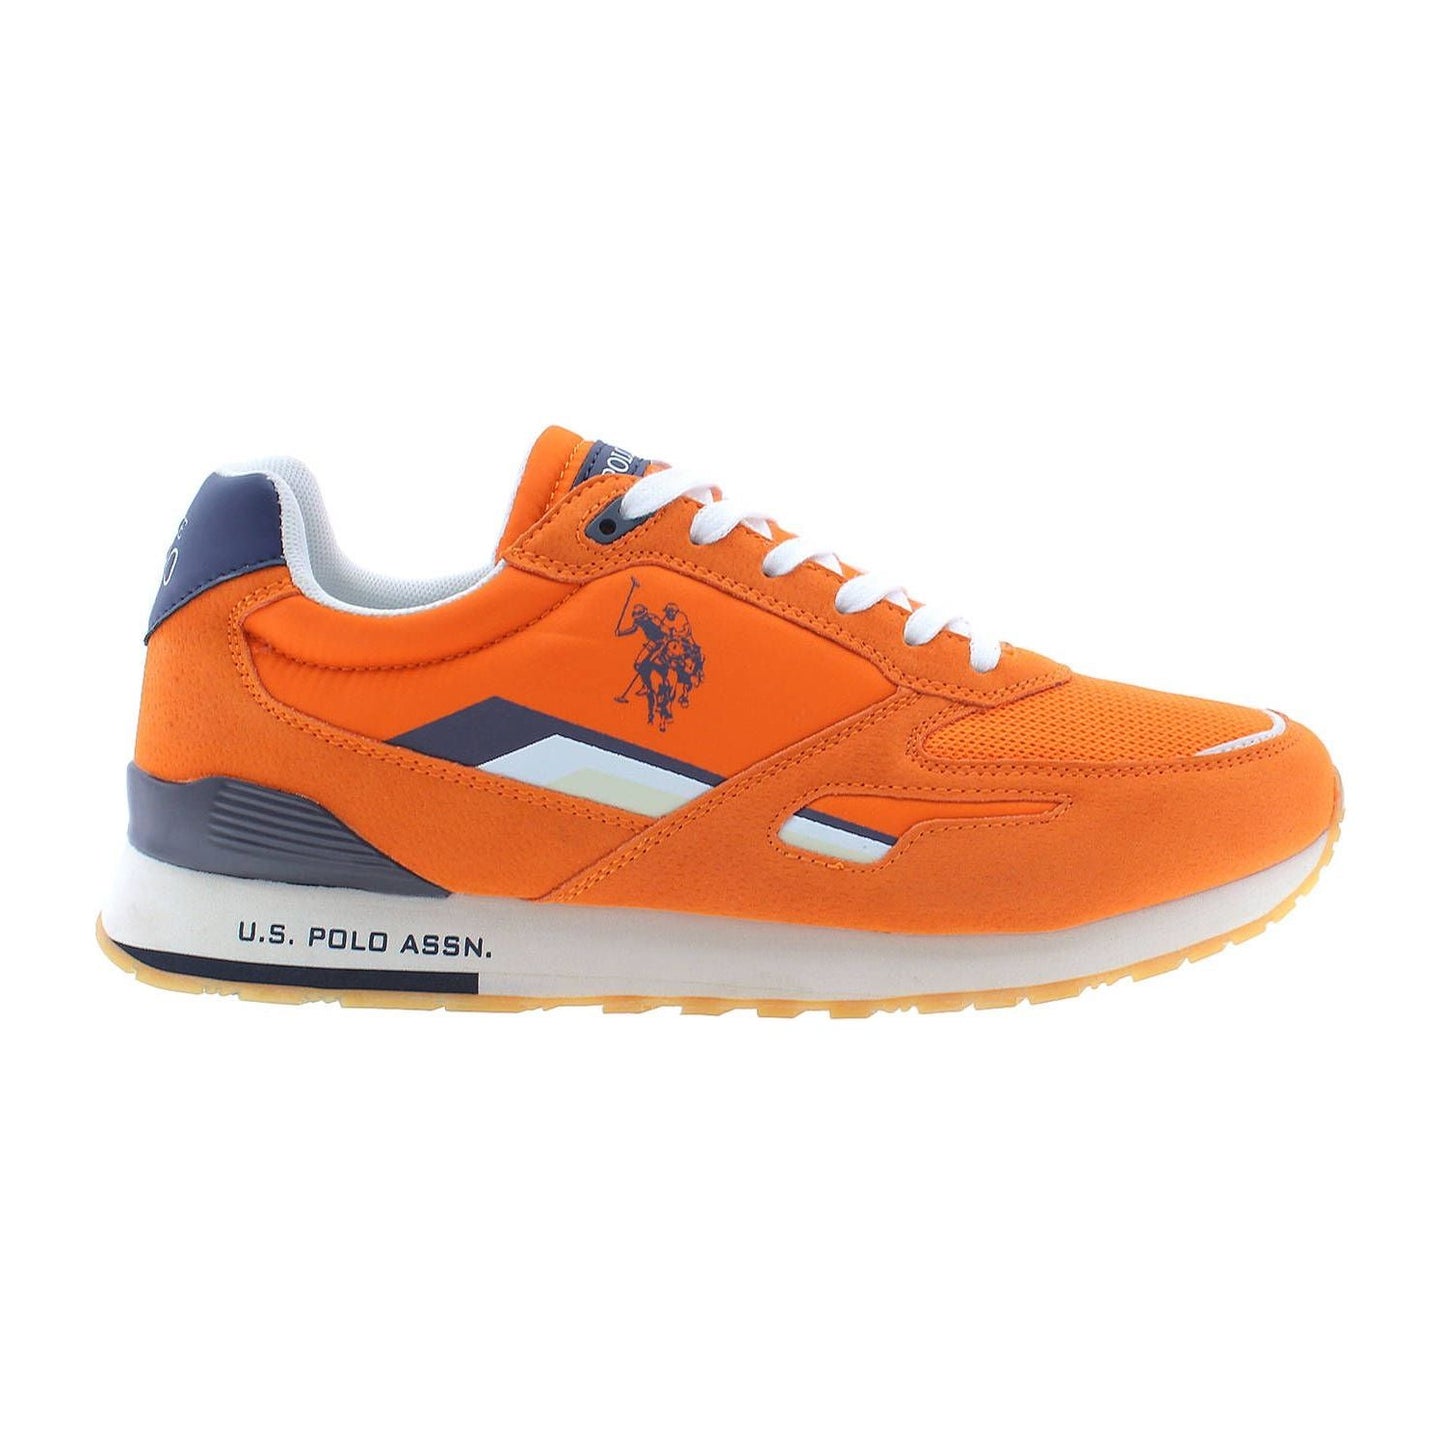 U.S. POLO ASSN. | Electrify Your Step: Vibrant Orange Sports Sneakers| McRichard Designer Brands   